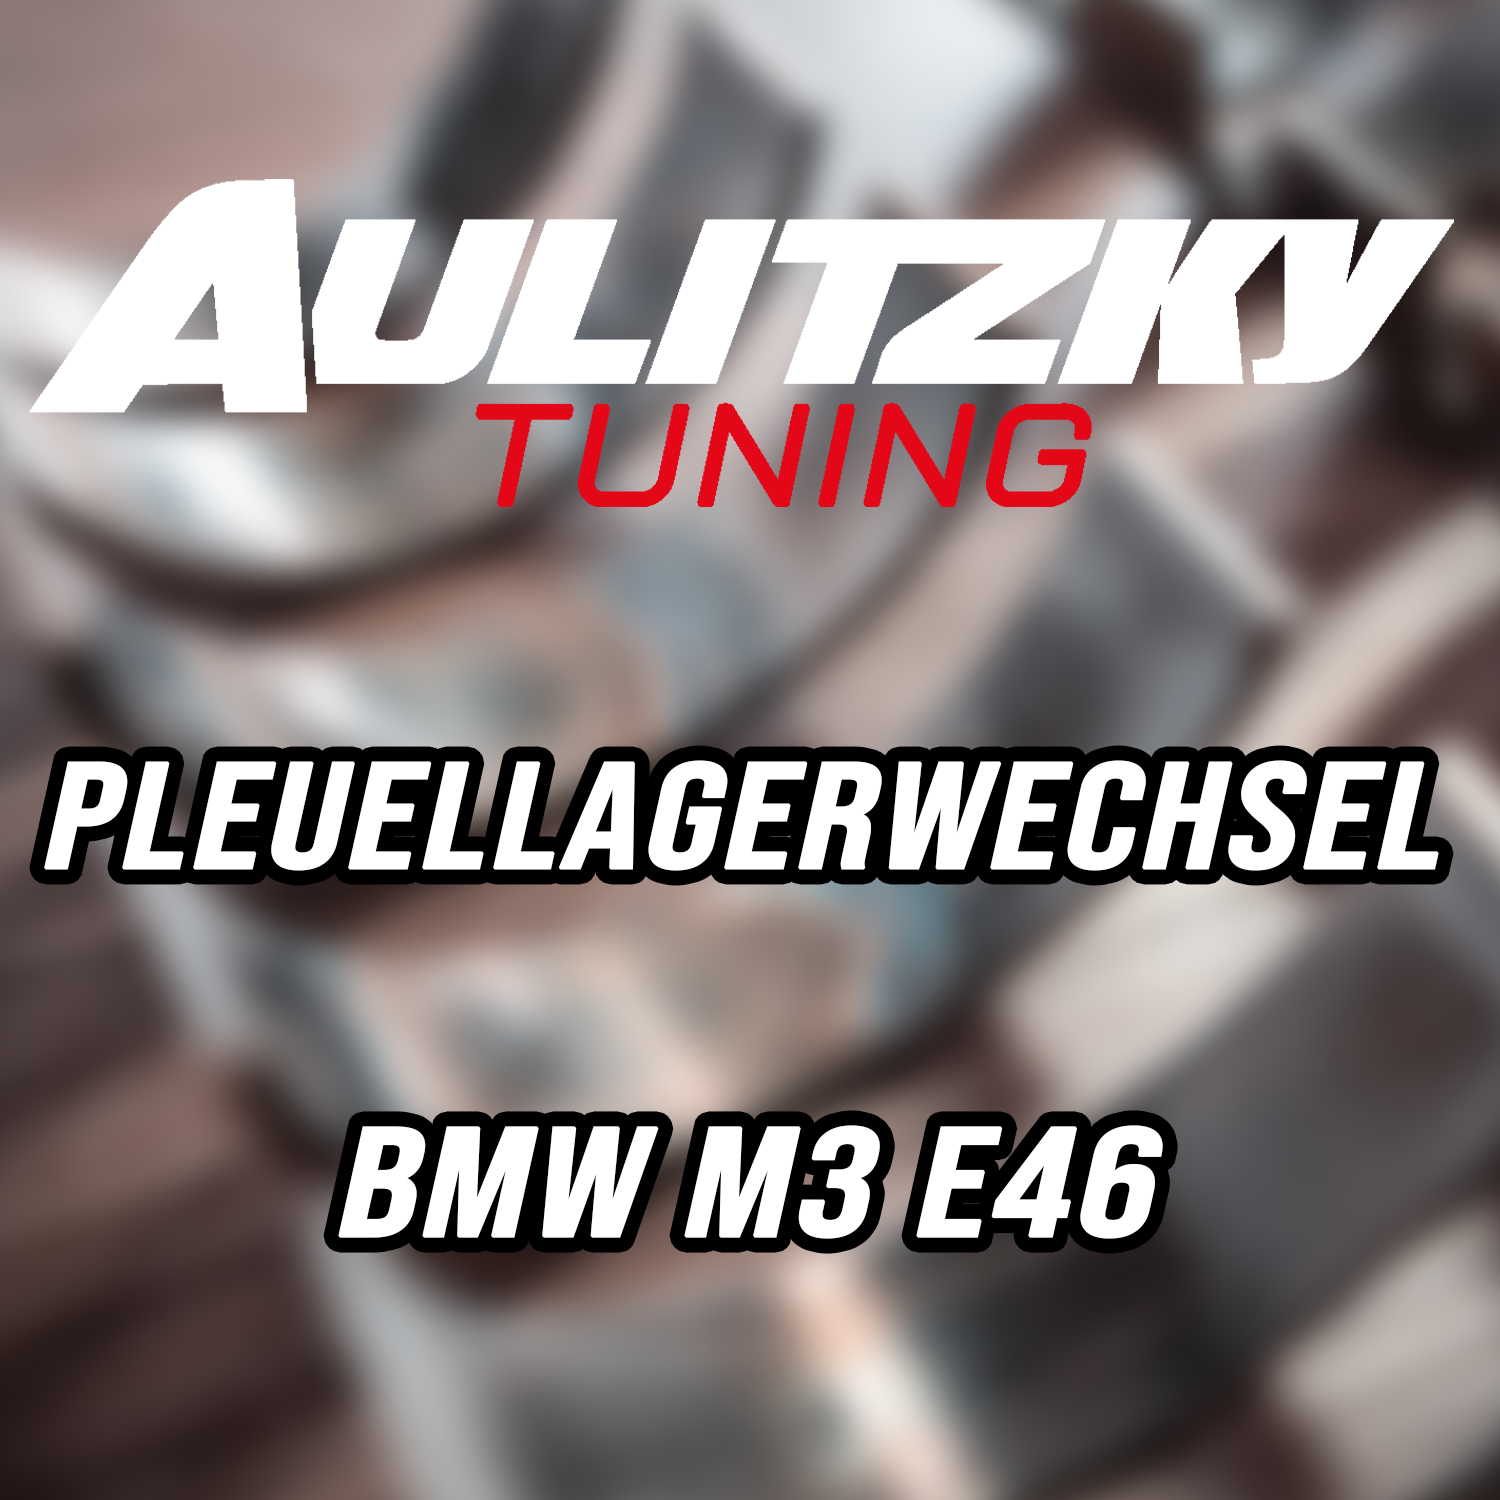 Aulitzky Tuning | Pleuellagerwechsel | BMW M3 (E46) 343PS S54